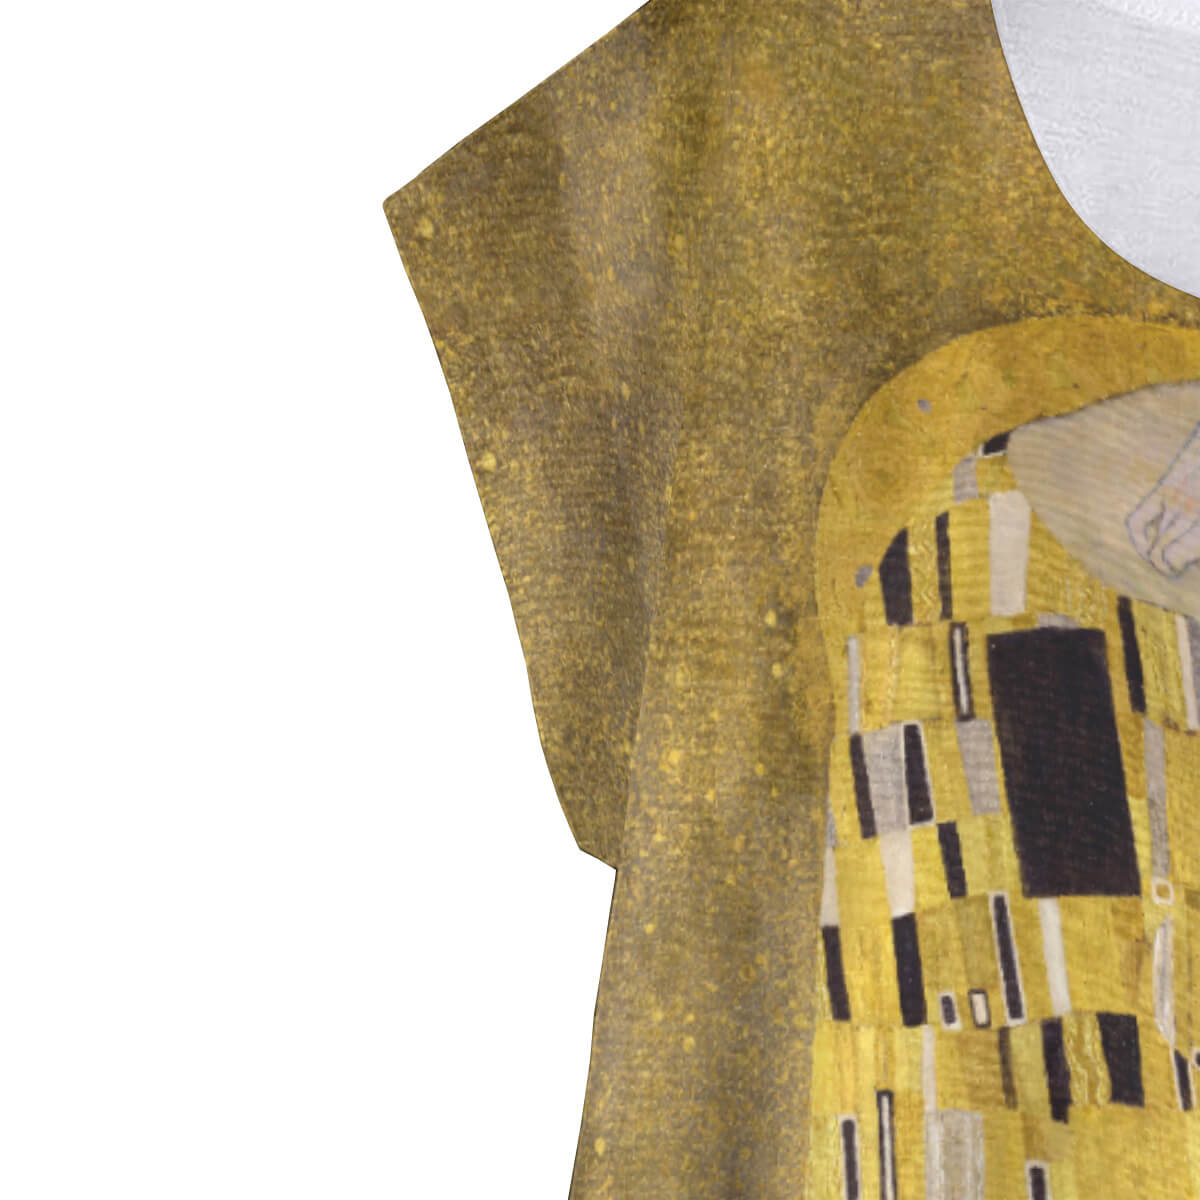 Gustav Klimt The Kiss Curved T-shirt (Plus Size)